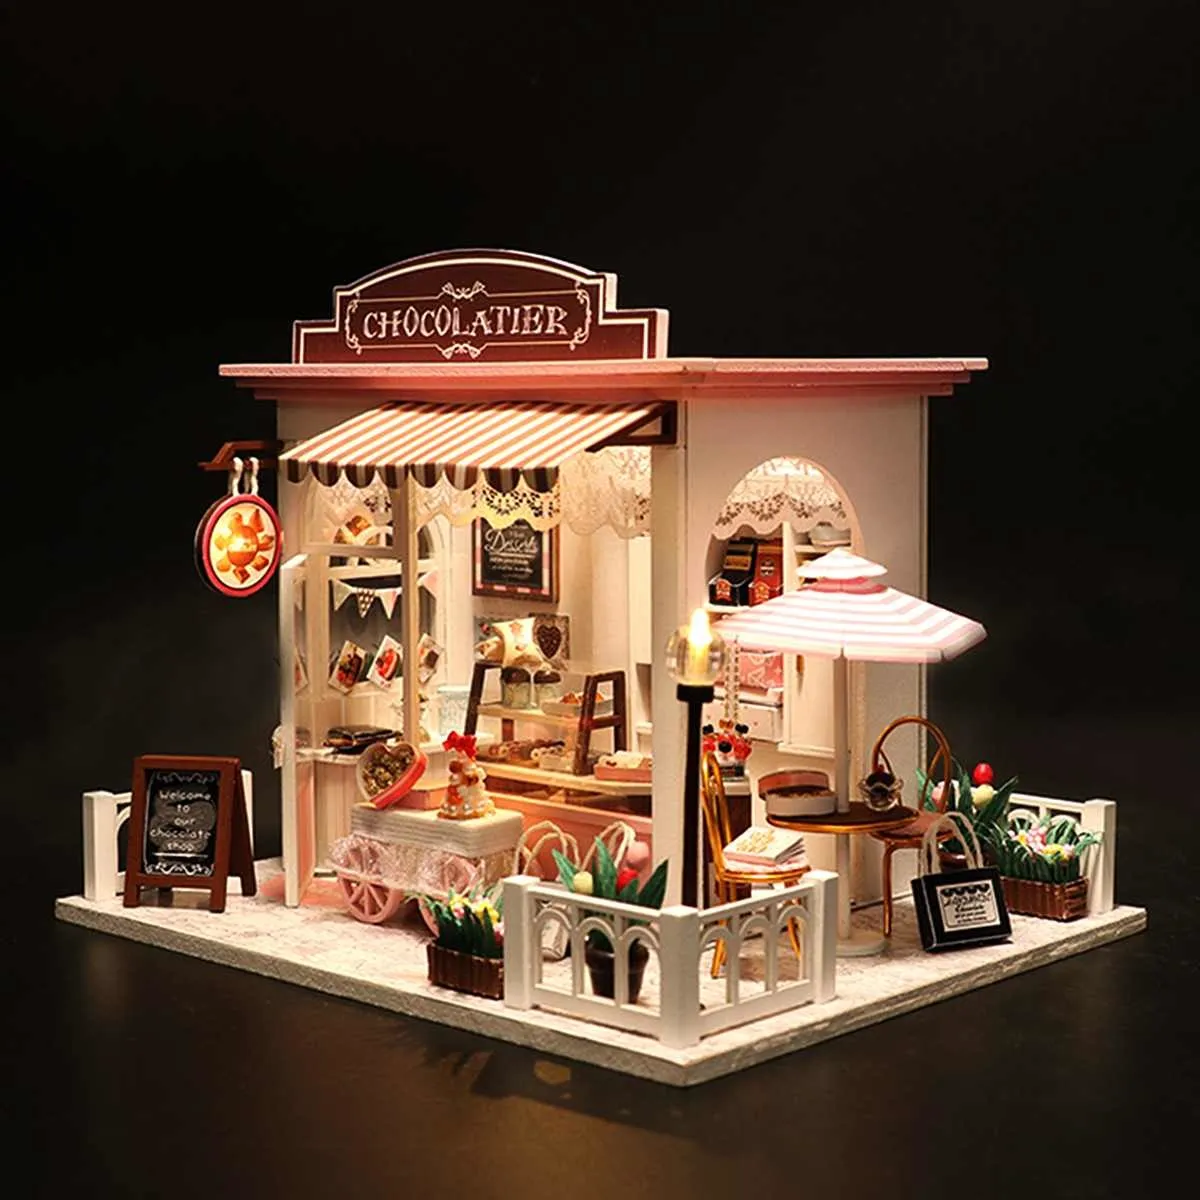 Mini Doll House Assemble Kits Toy Kids Diy Handgjorda träkuller Modell Simulering Choklad House Furniture Toy With LED Light 29105093